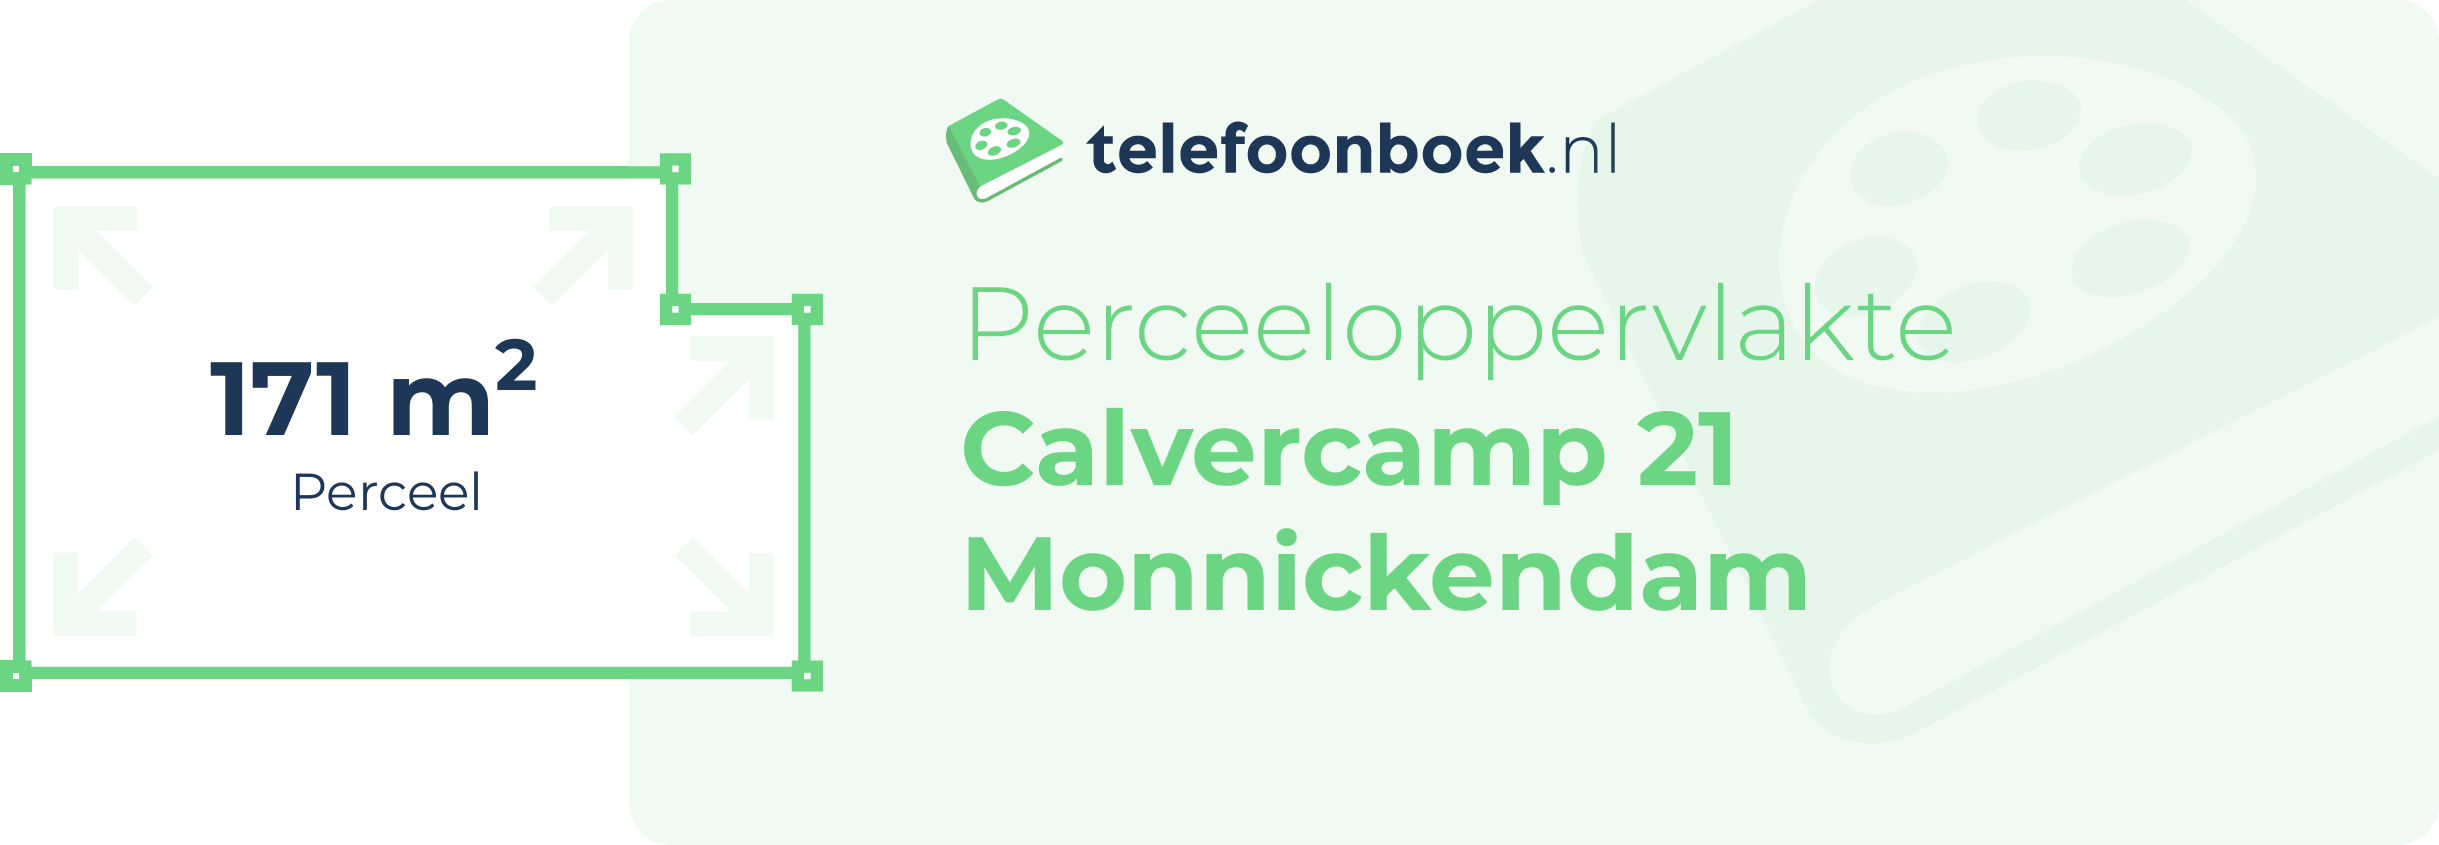 Perceeloppervlakte Calvercamp 21 Monnickendam